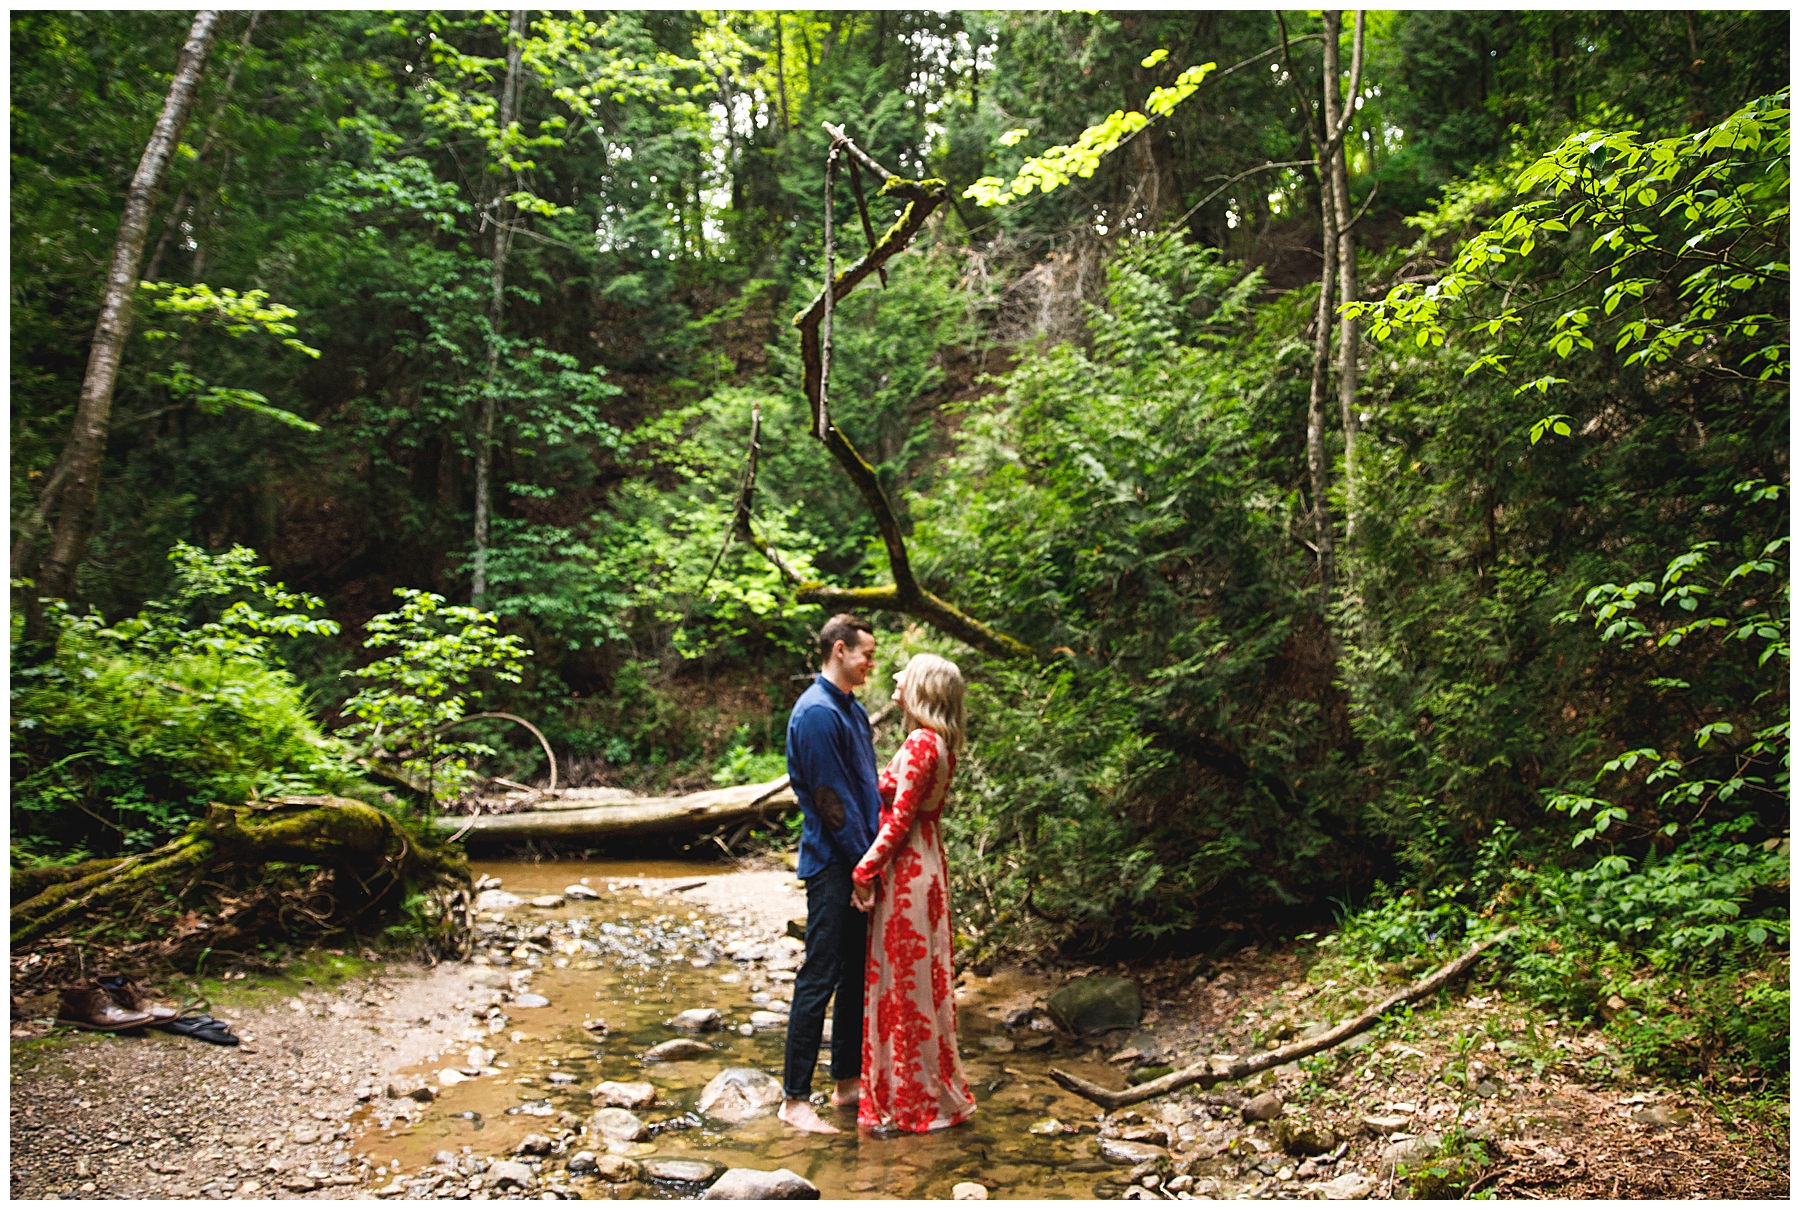  Romantic + Whimsical woodland engagement session - Chelsea Matson Photography 